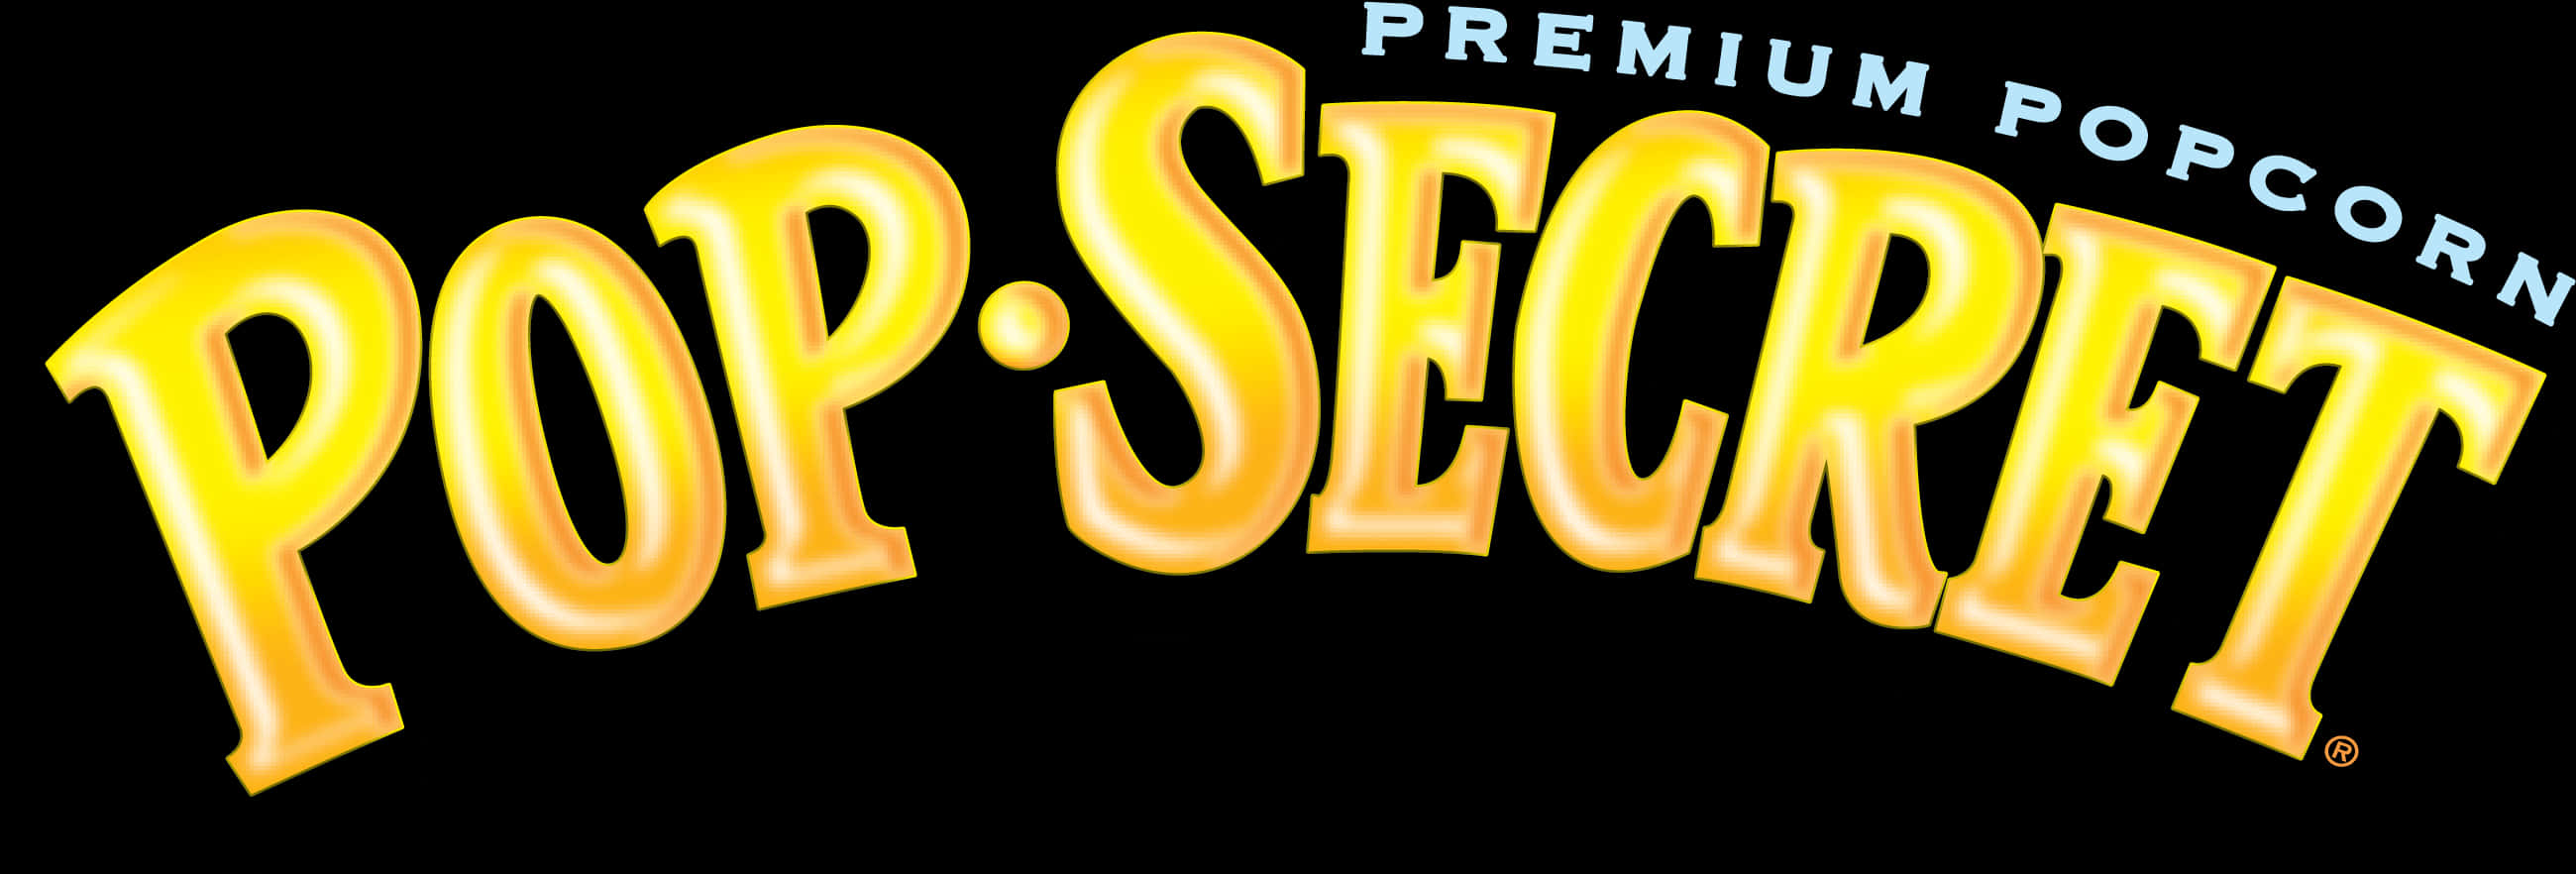 Pop Secret Premium Popcorn Logo PNG